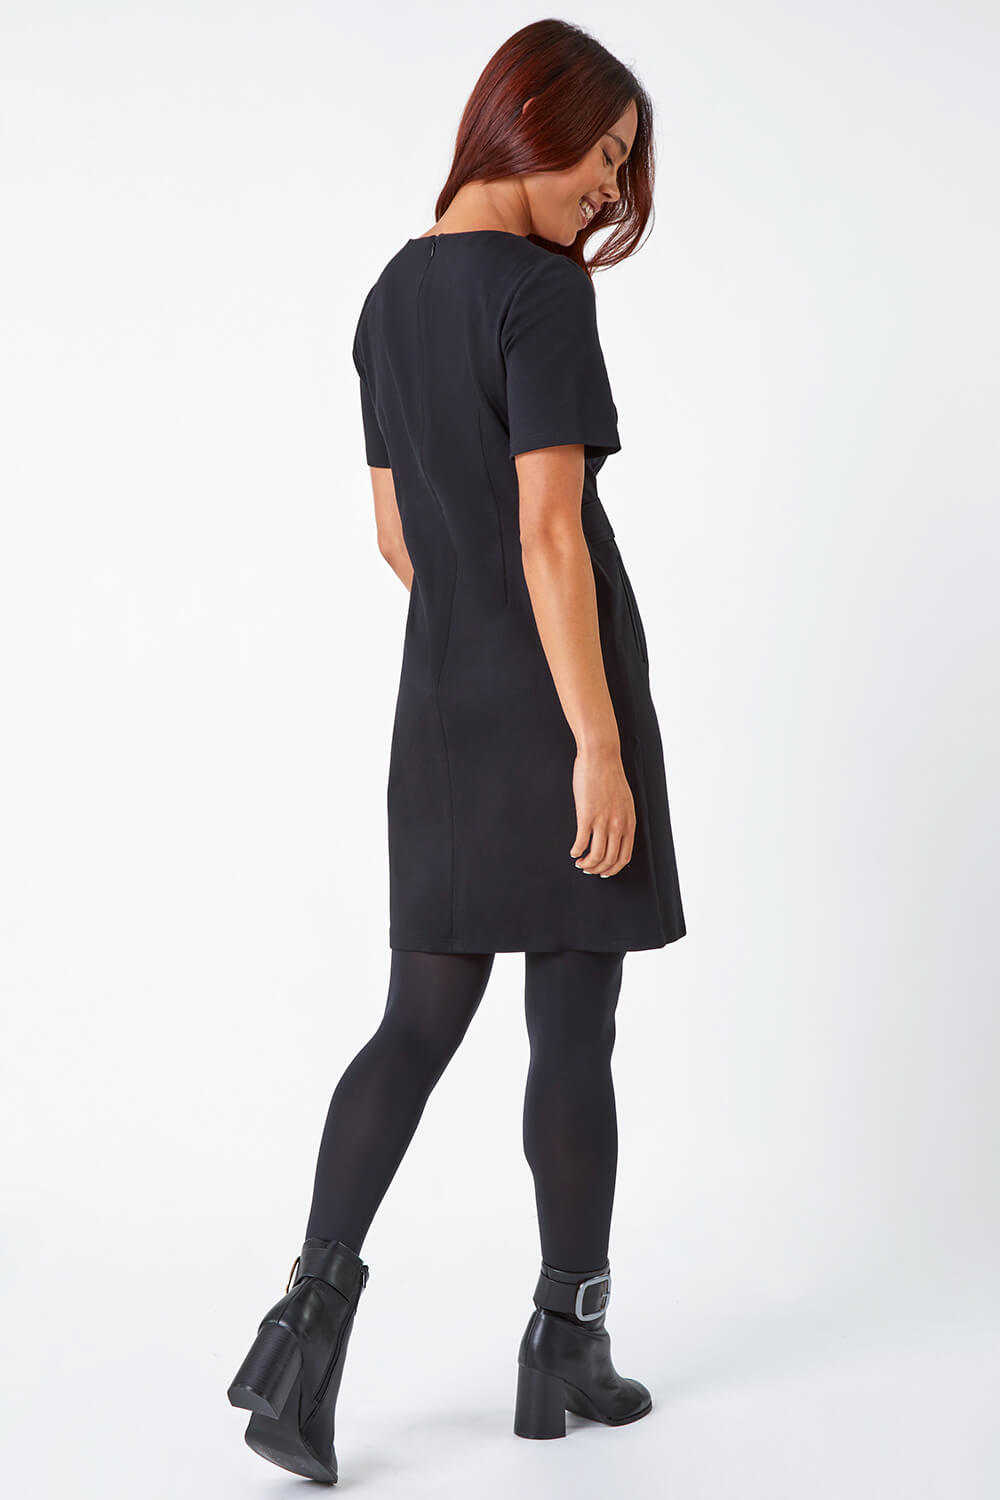 Black Petite Belted Shift Stretch Dress, Image 3 of 5